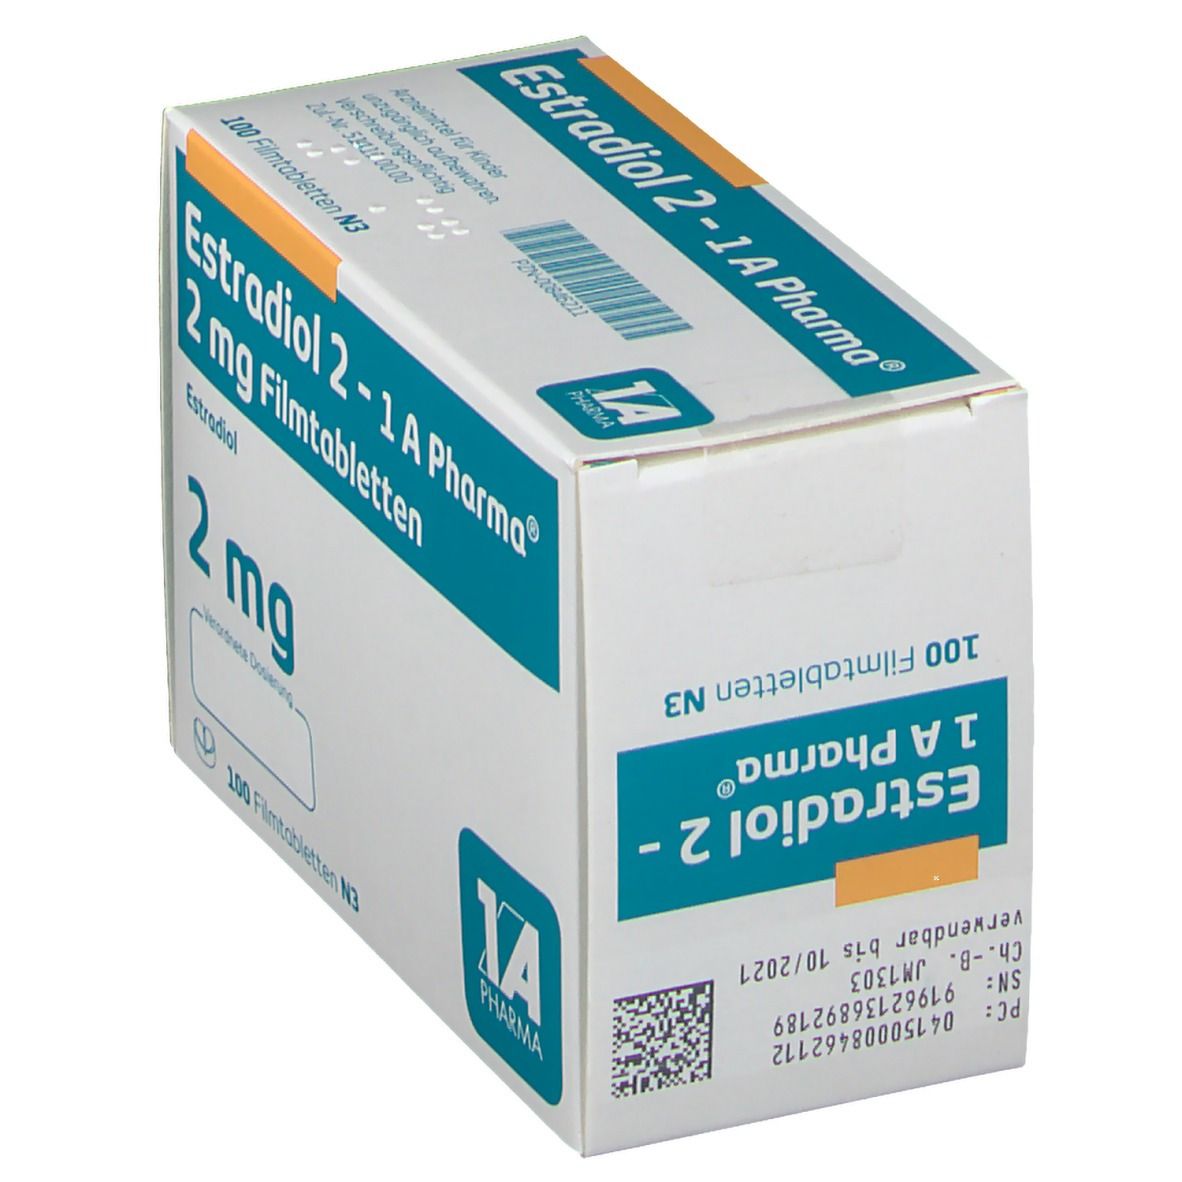 Estradiol 2 1A Pharma®